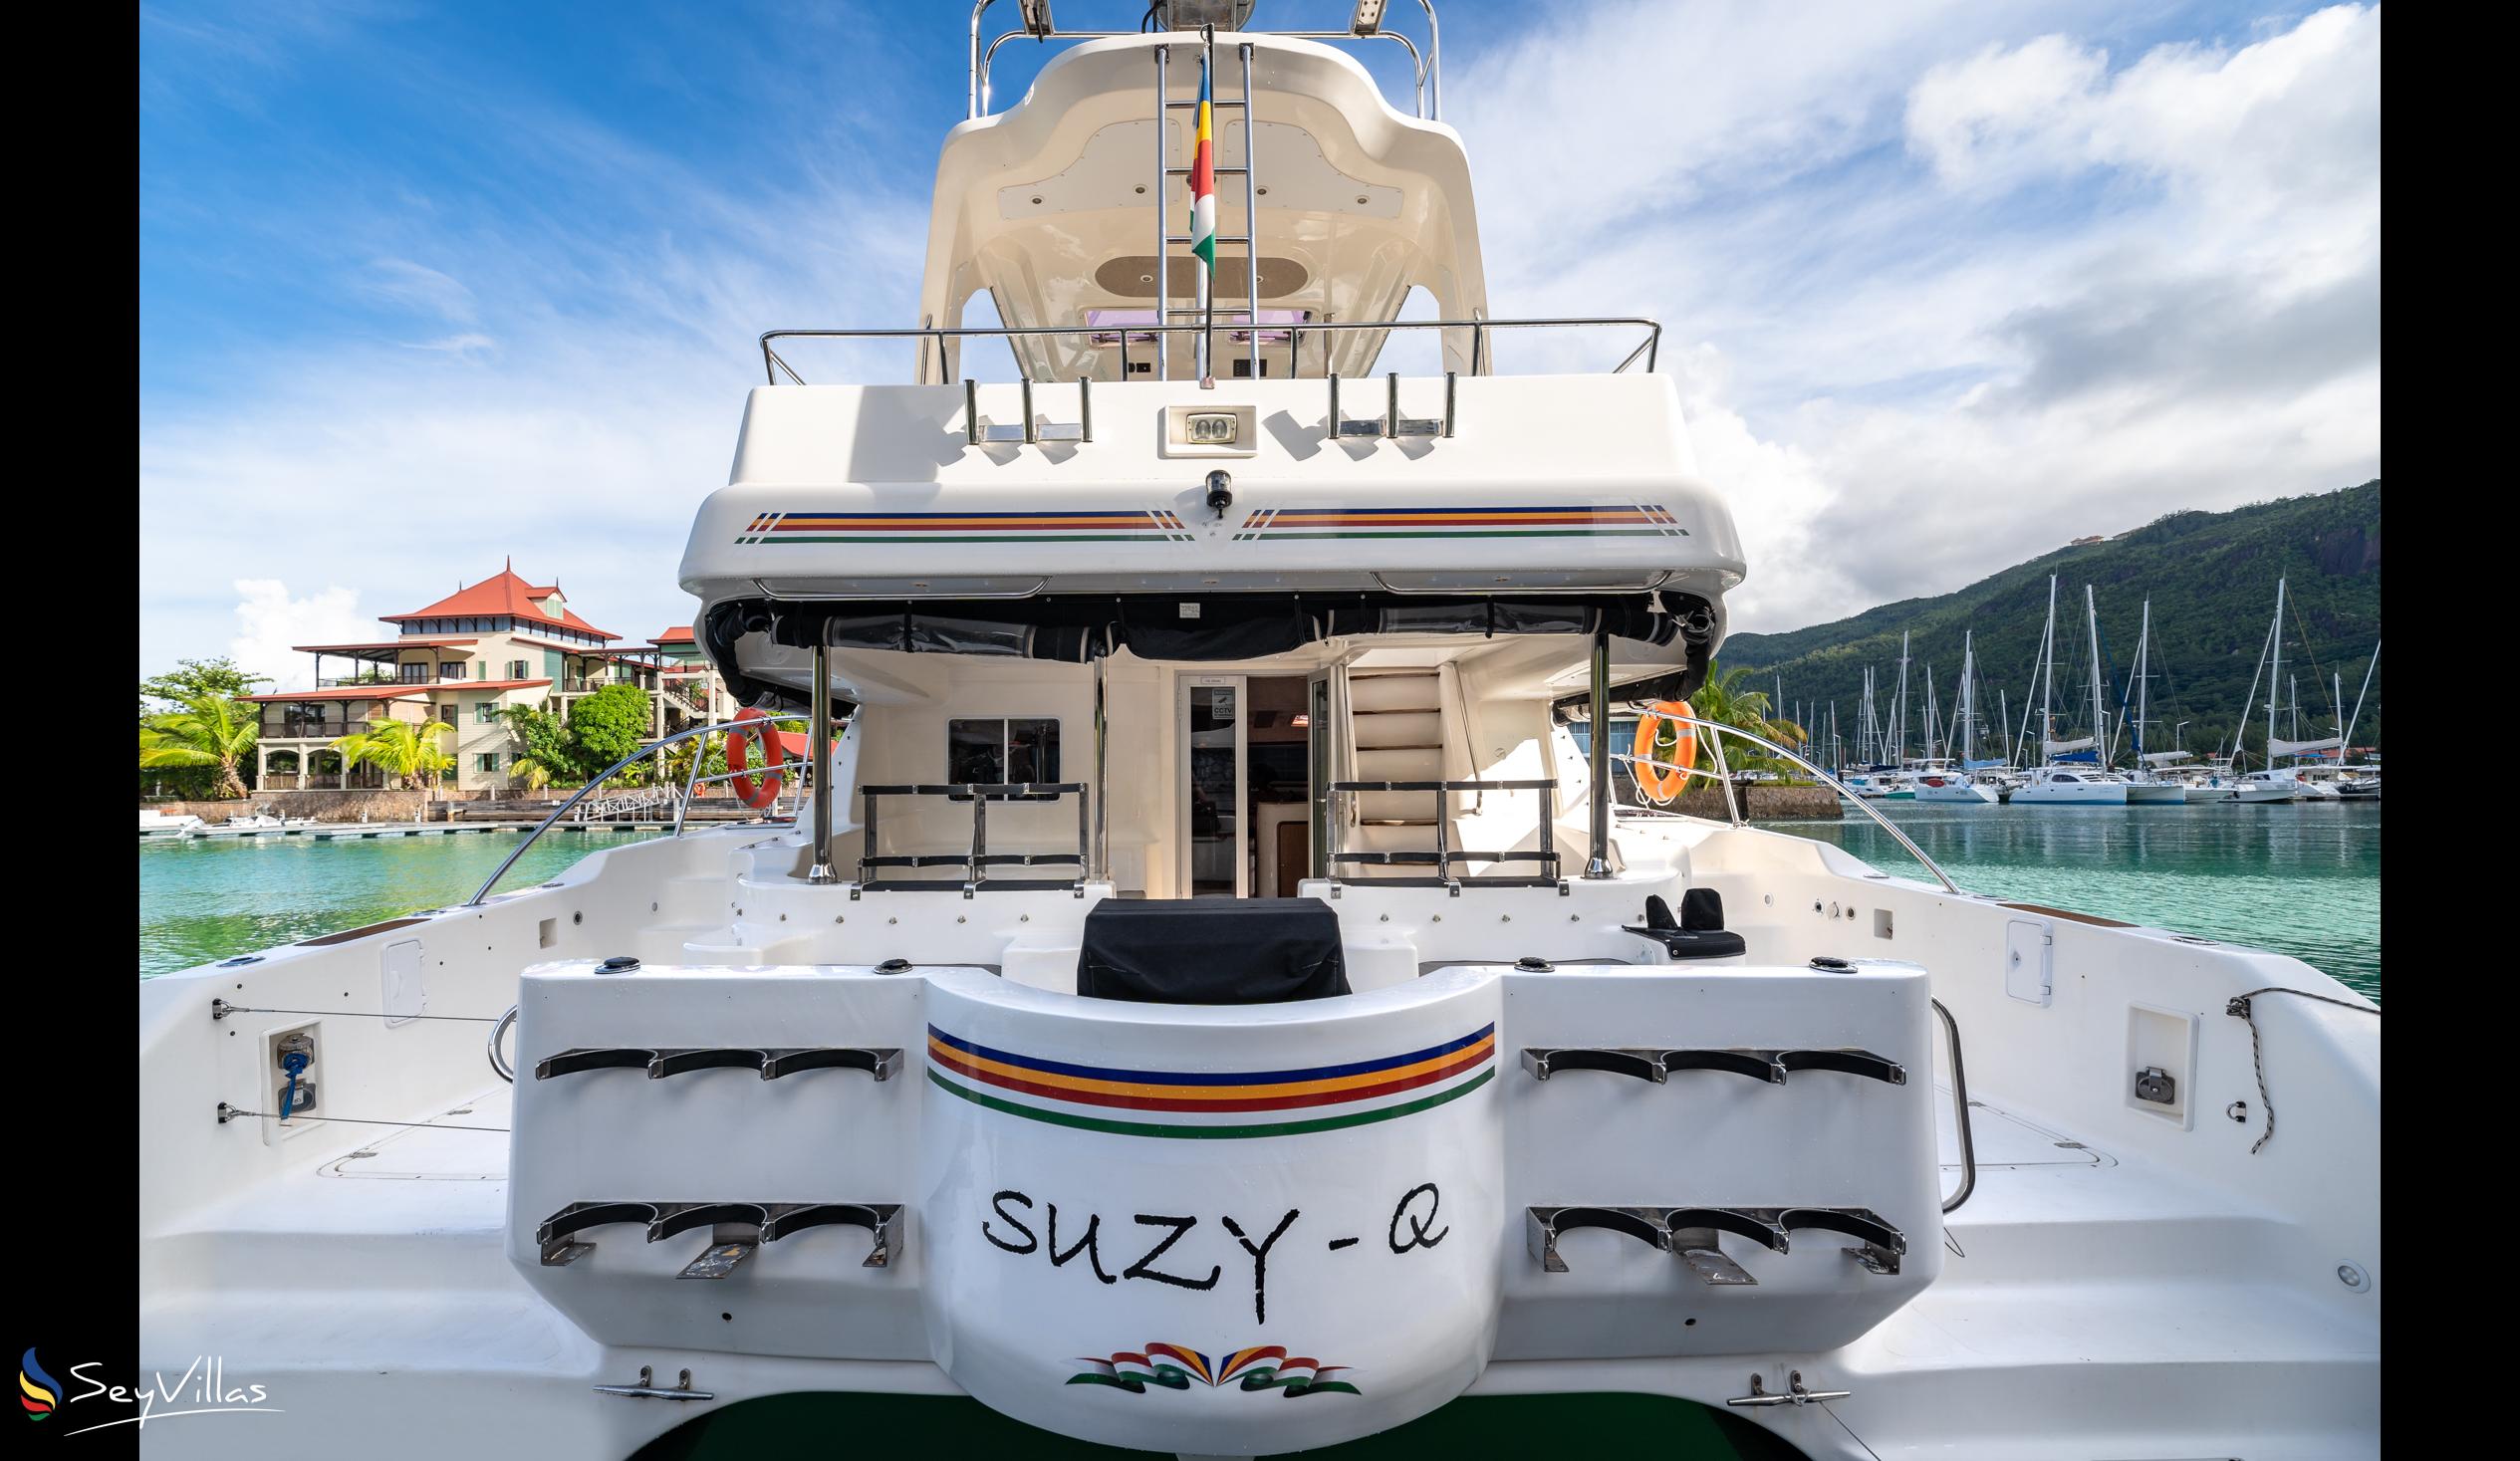 Foto 58: Seyscapes Yacht Charter - Charter completo Suzy Q - Seychelles (Seychelles)